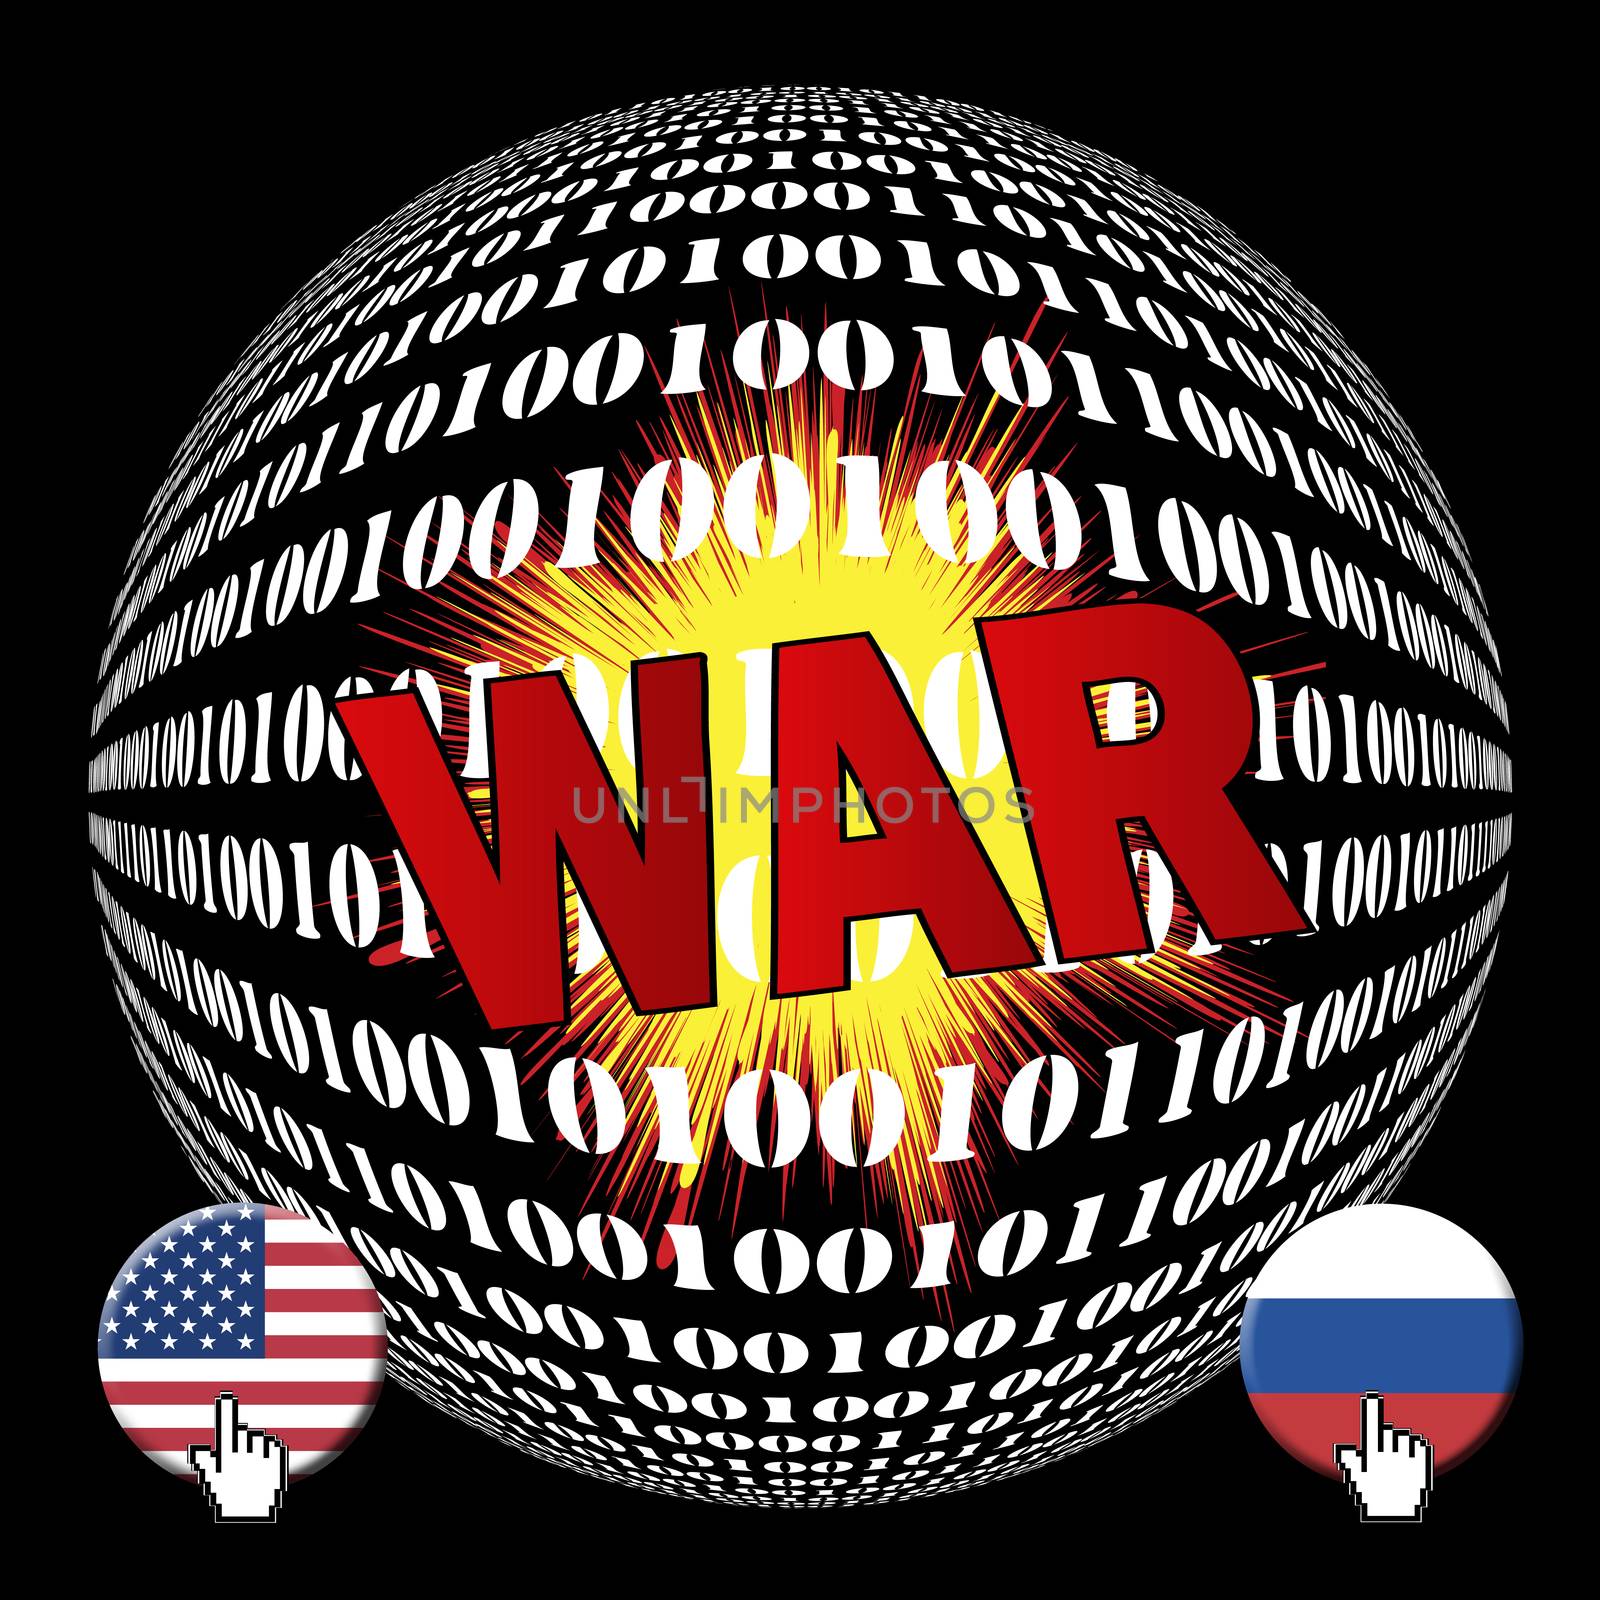 Cyberwar between USA and Russia by Bambara